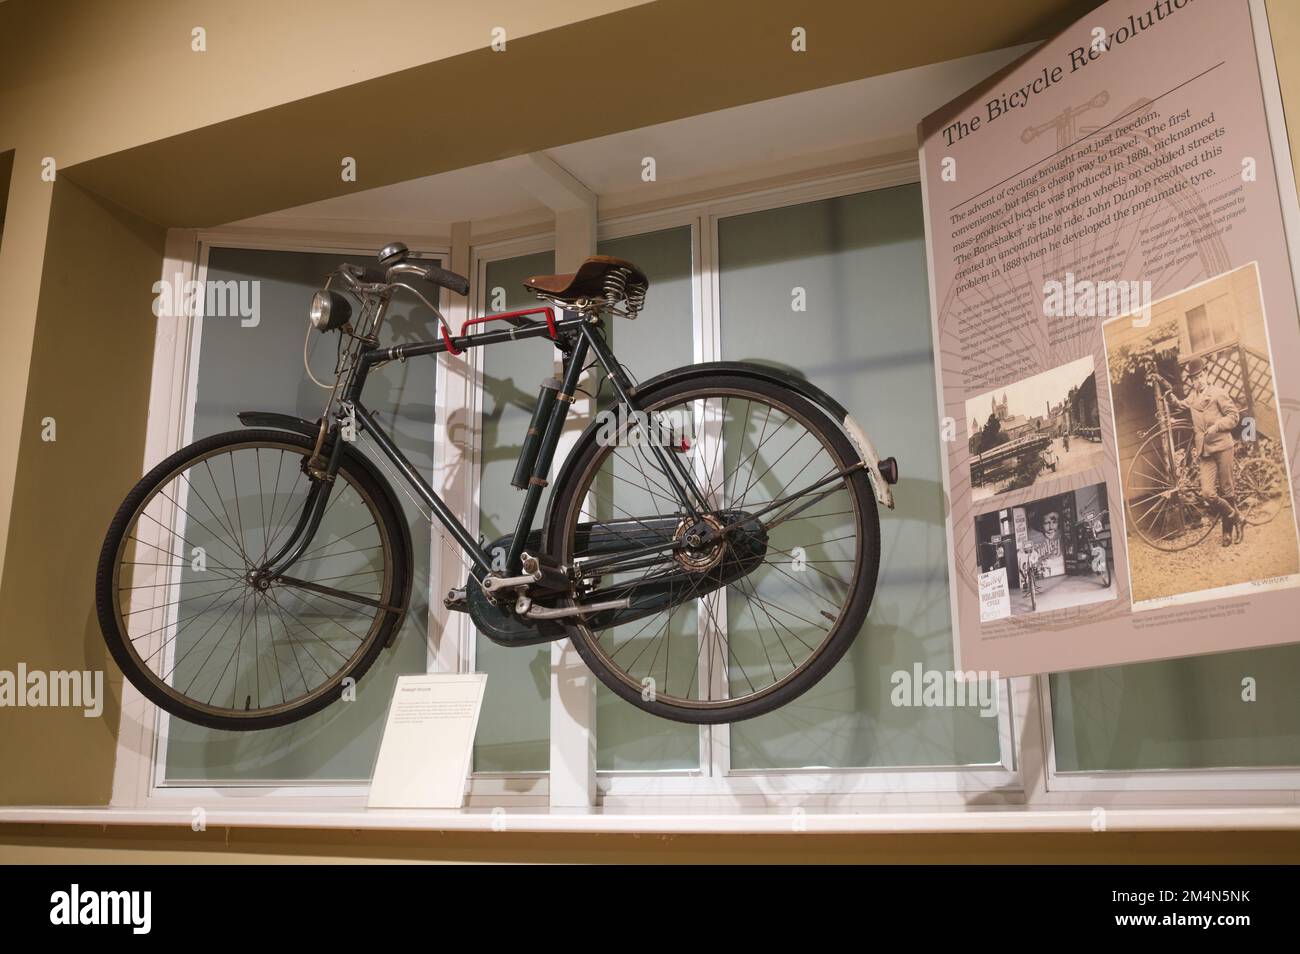 Bicycle Revolution display at West Berkshire museum in Newbury Stock Photo